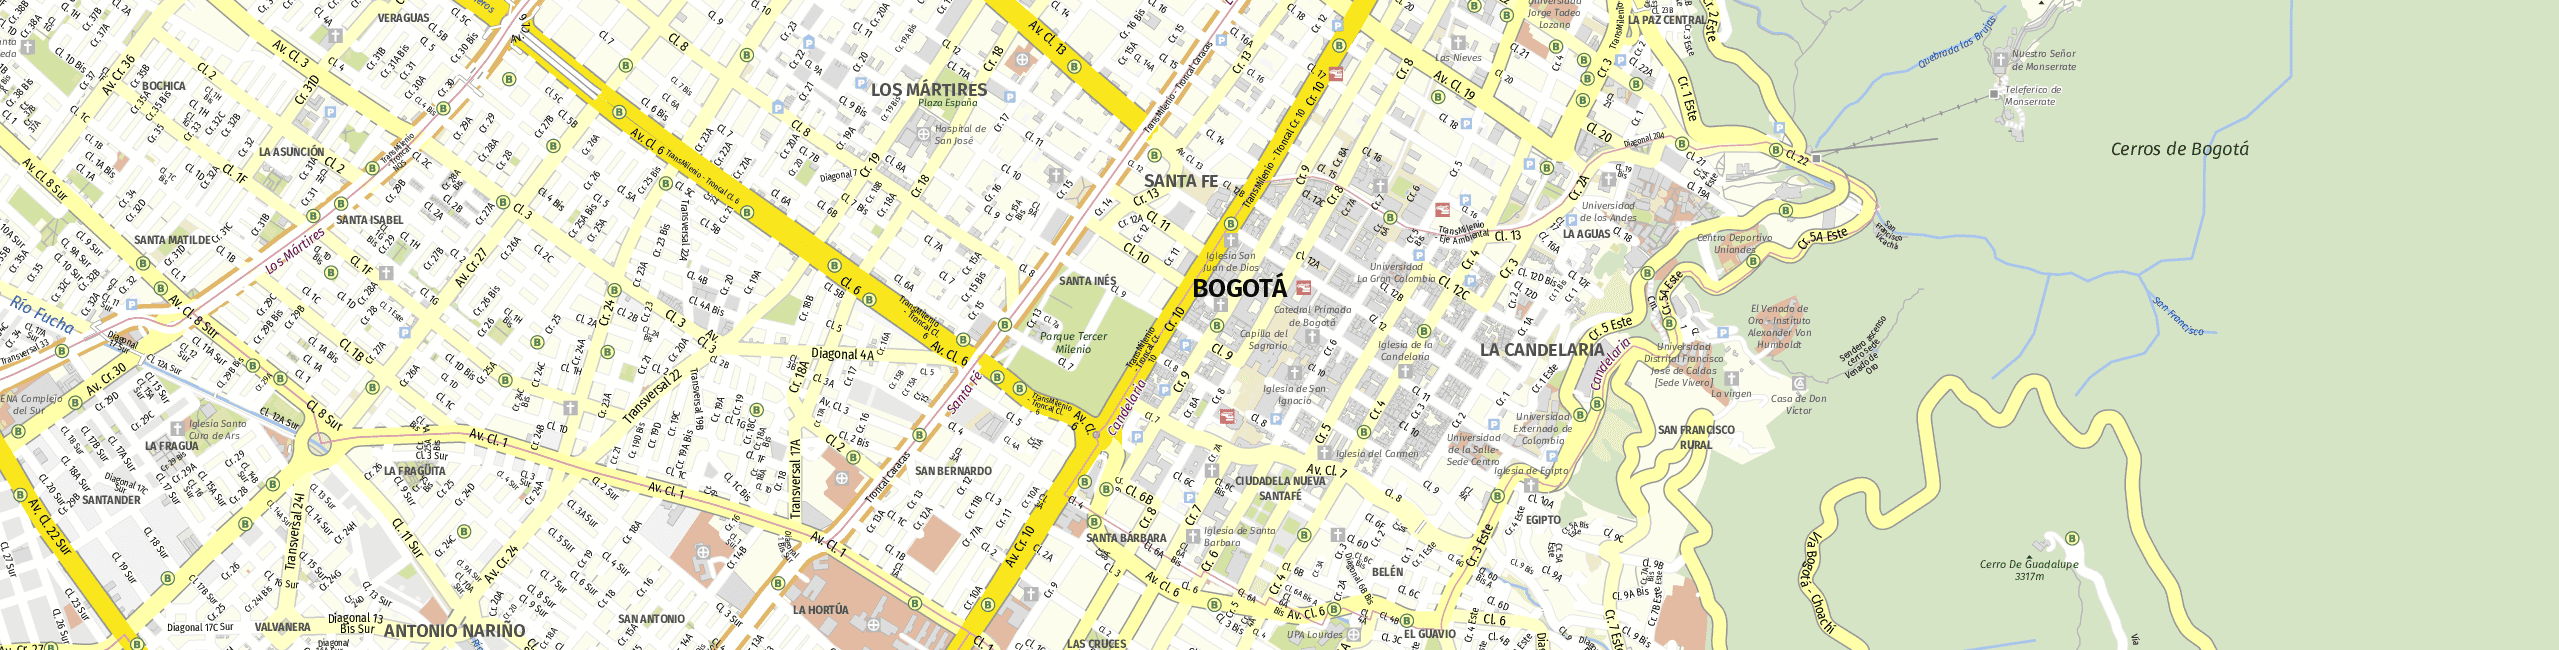 Stadtplan Bogotá zum Downloaden.